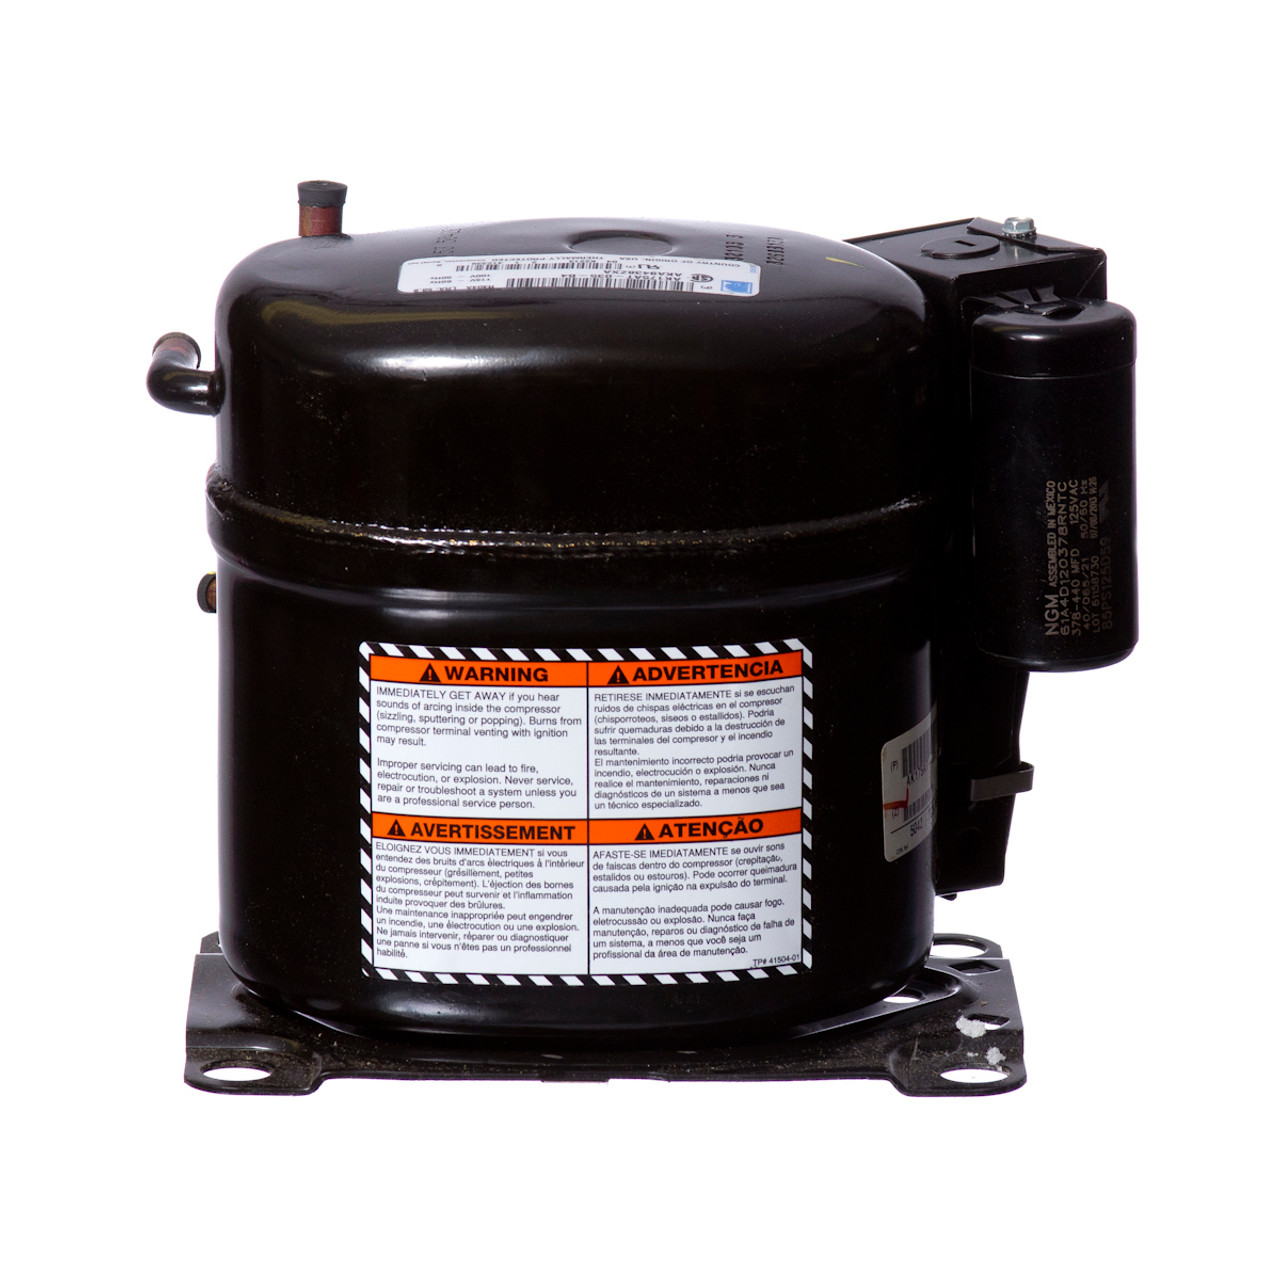 Citgo ice machine oil 68 637131001001 55 gal Drum Compressor Oil